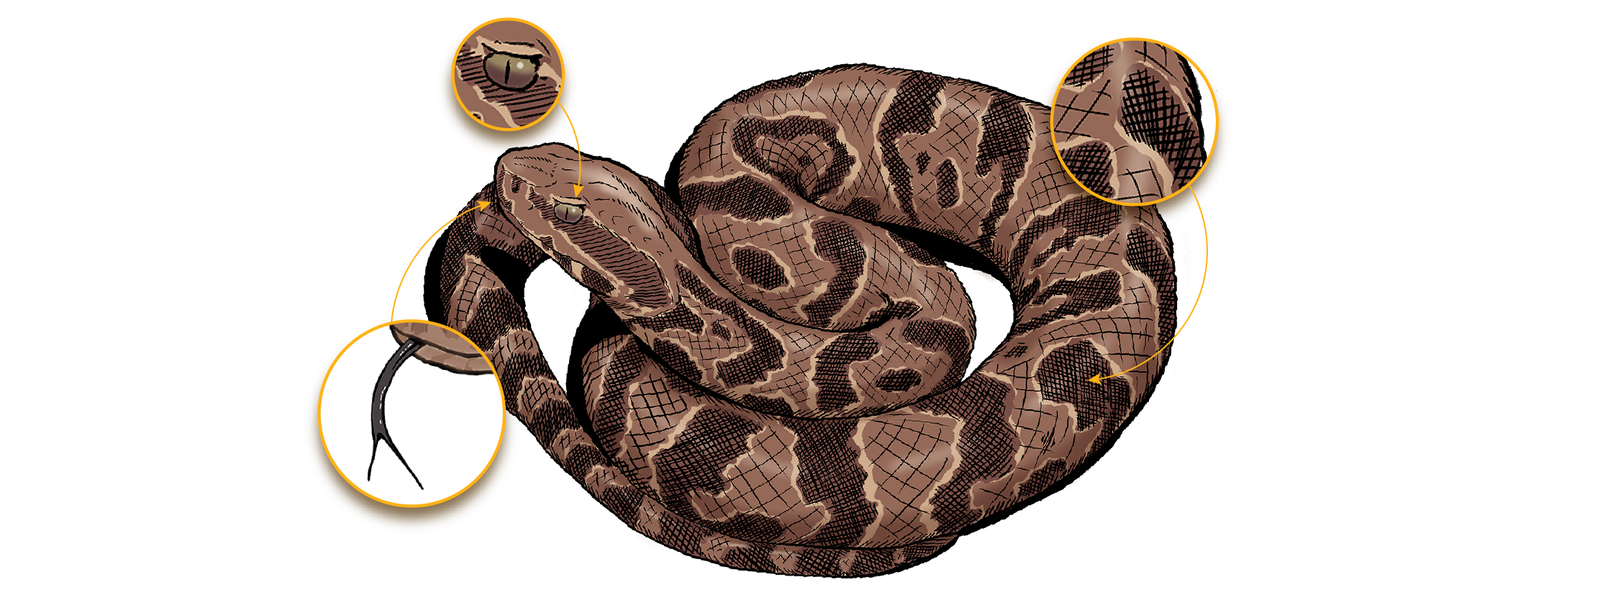 Eastern Hog-nosed Snake – Florida Snake ID Guide